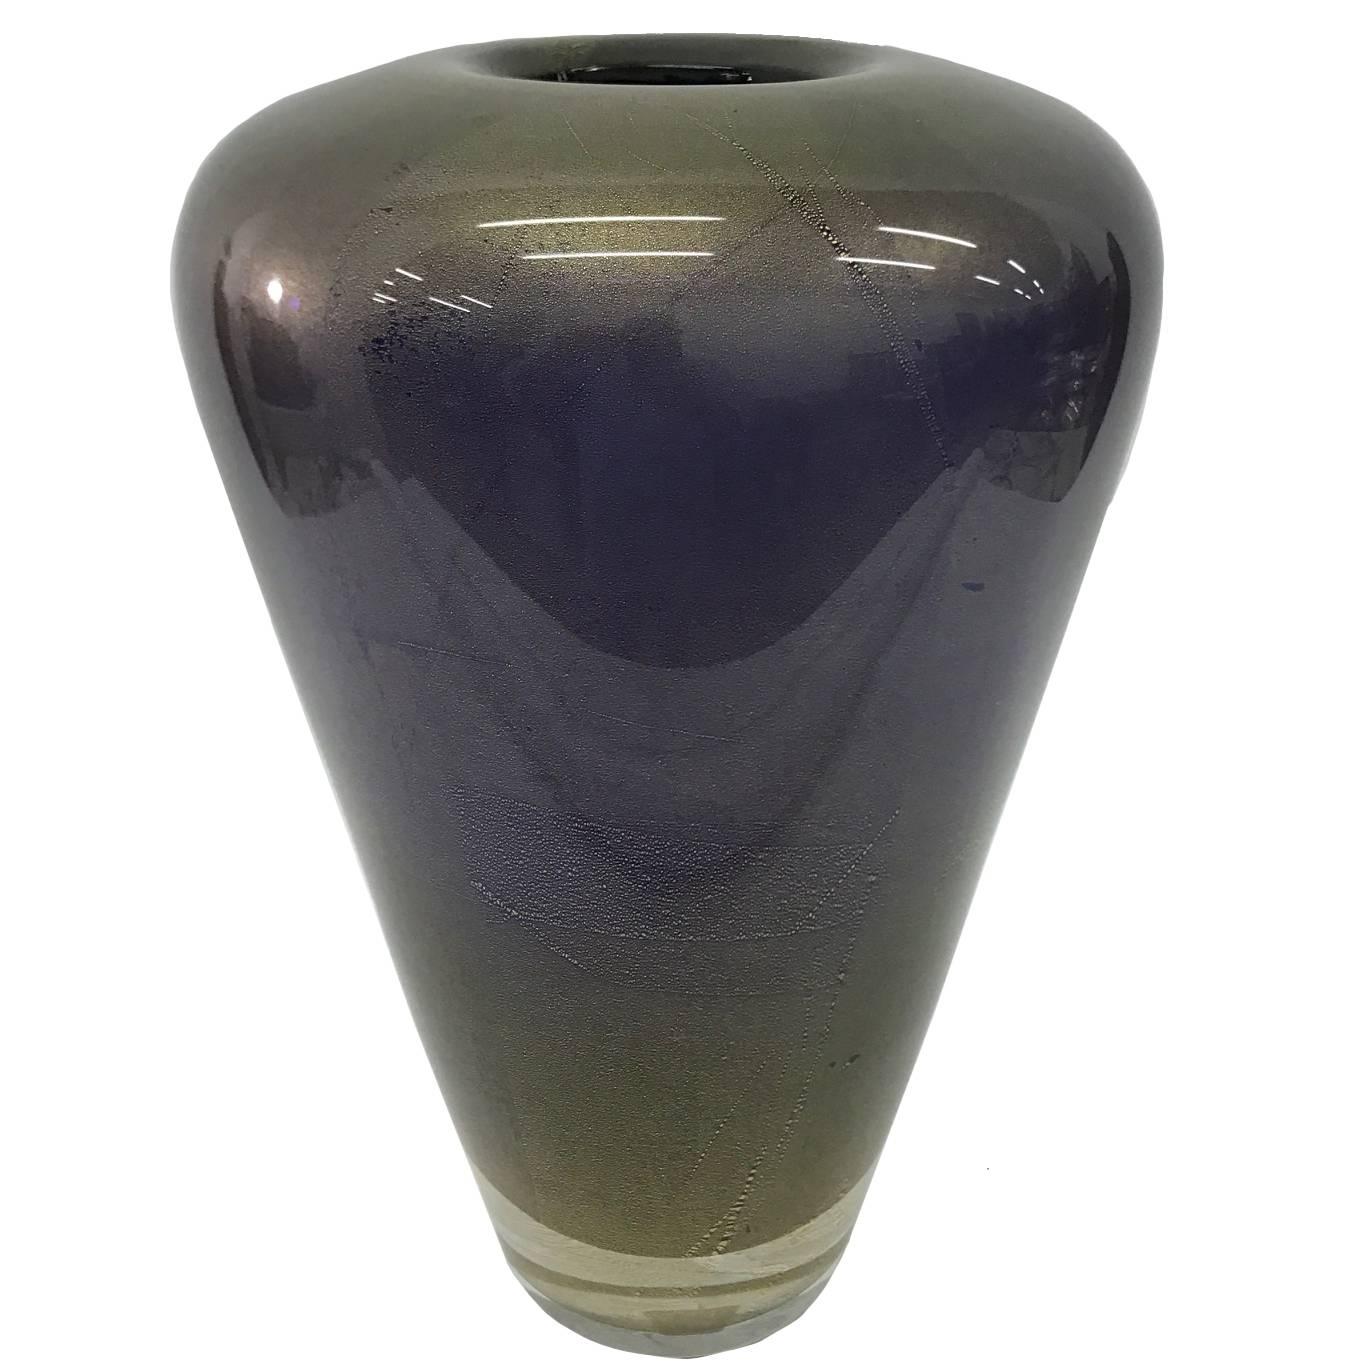 Murano Glass vase by Venini 2001